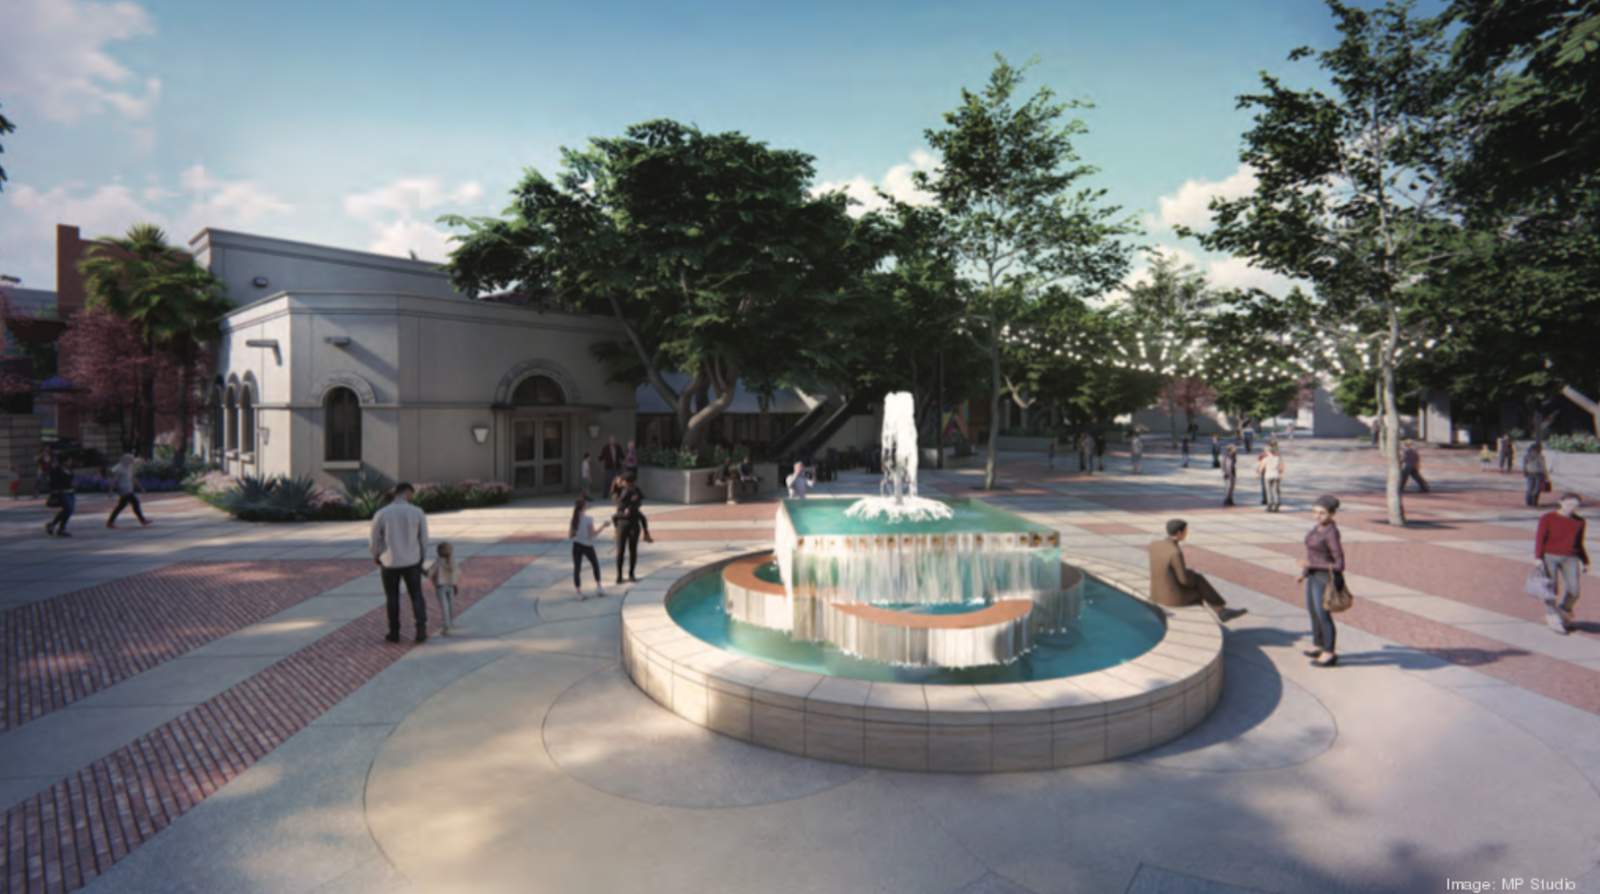 Maverick Plaza transformation at La Villita planned to begin this year